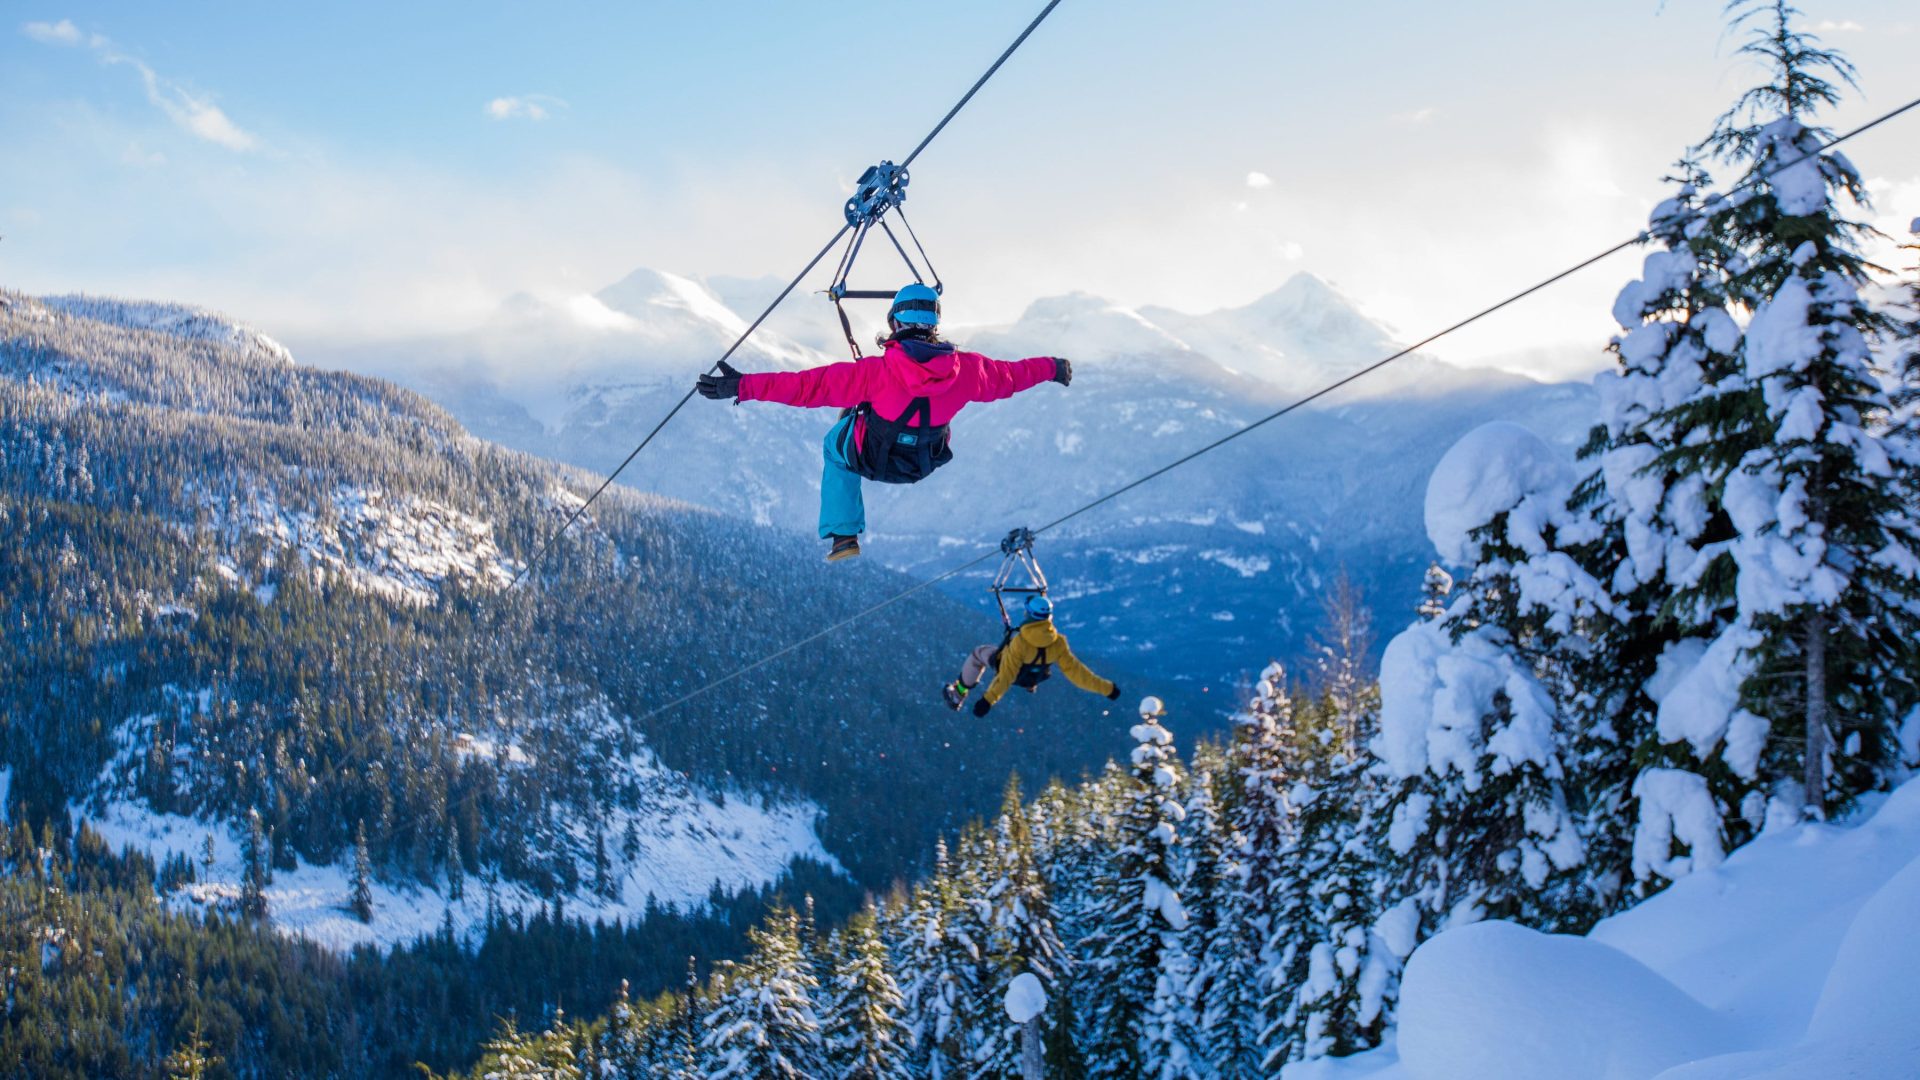 Ziplining in winter, Whistler-Blackcomb, BC